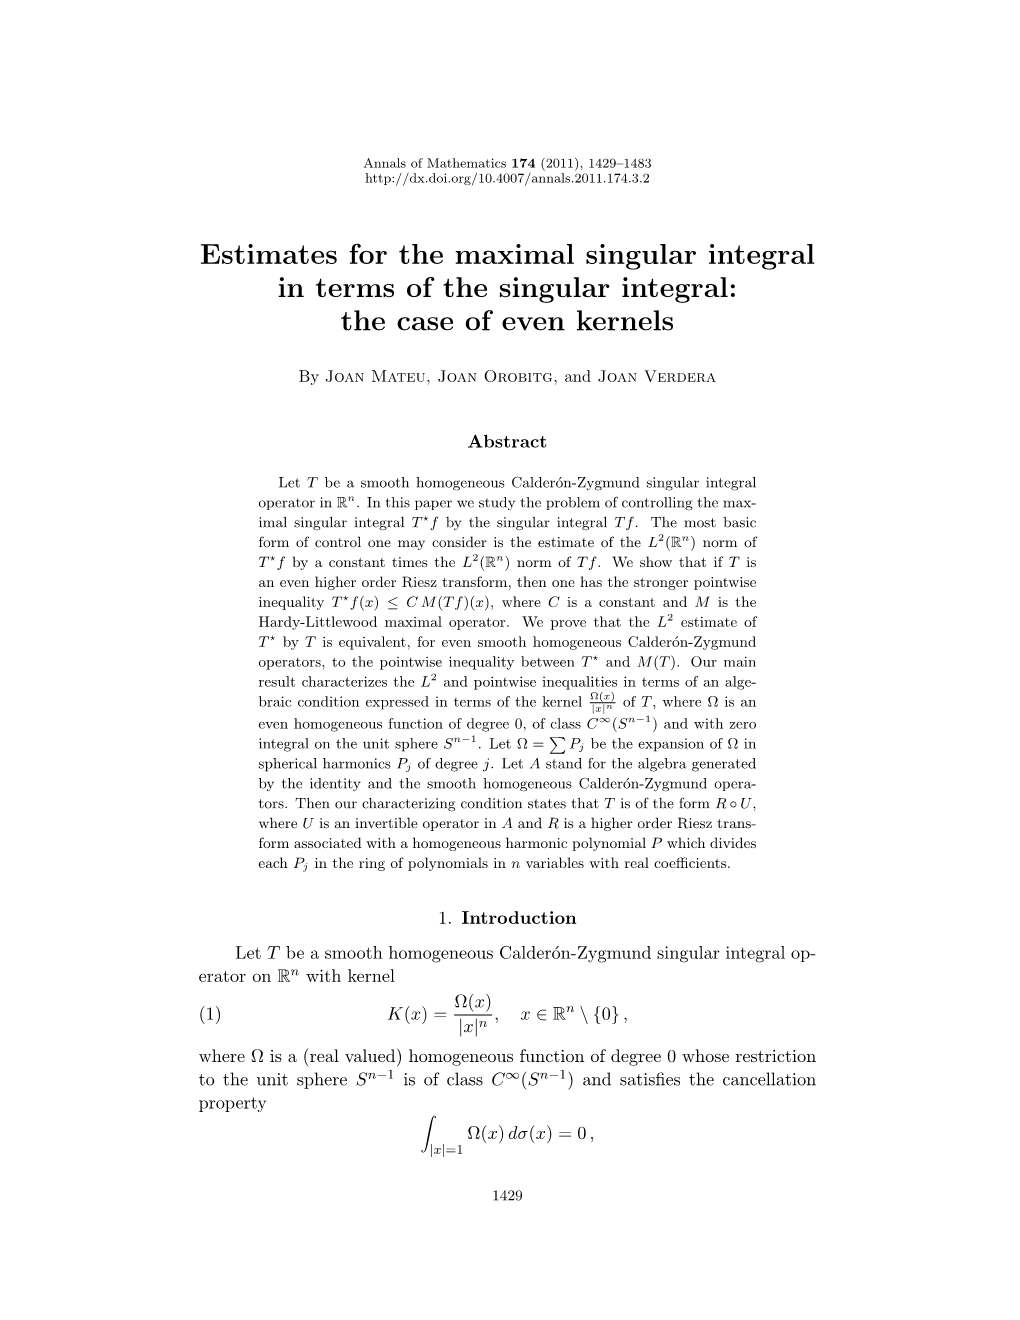 Estimates for the Maximal Singular Integral in Terms of the Singular Integral: the Case of Even Kernels